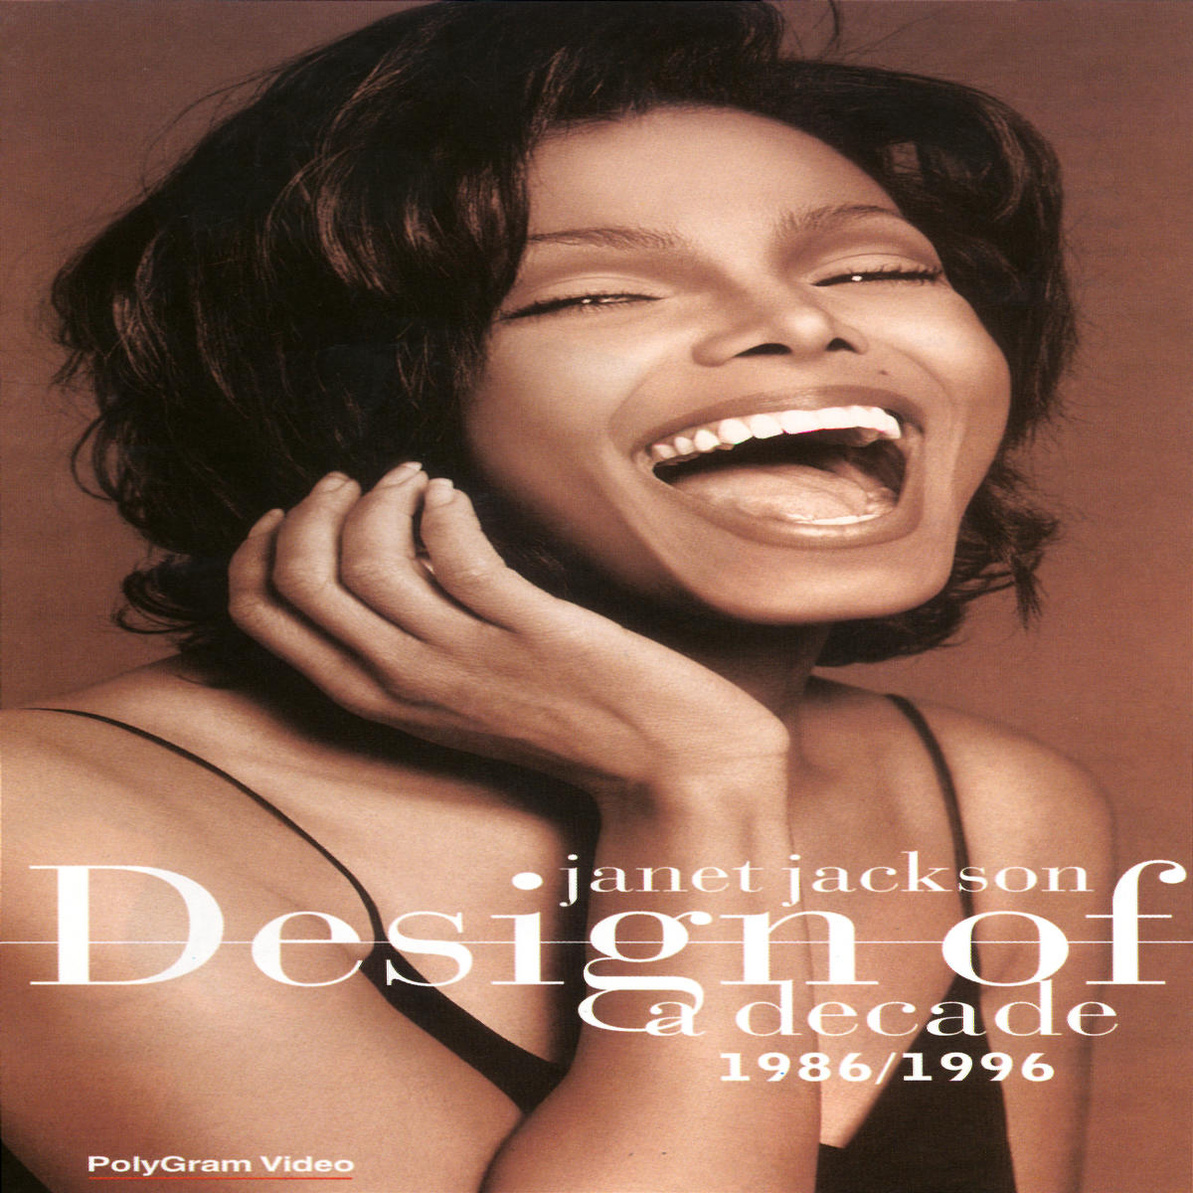 Janet Jackson: Design Of A Decade 1986/1996 [1996 Video]